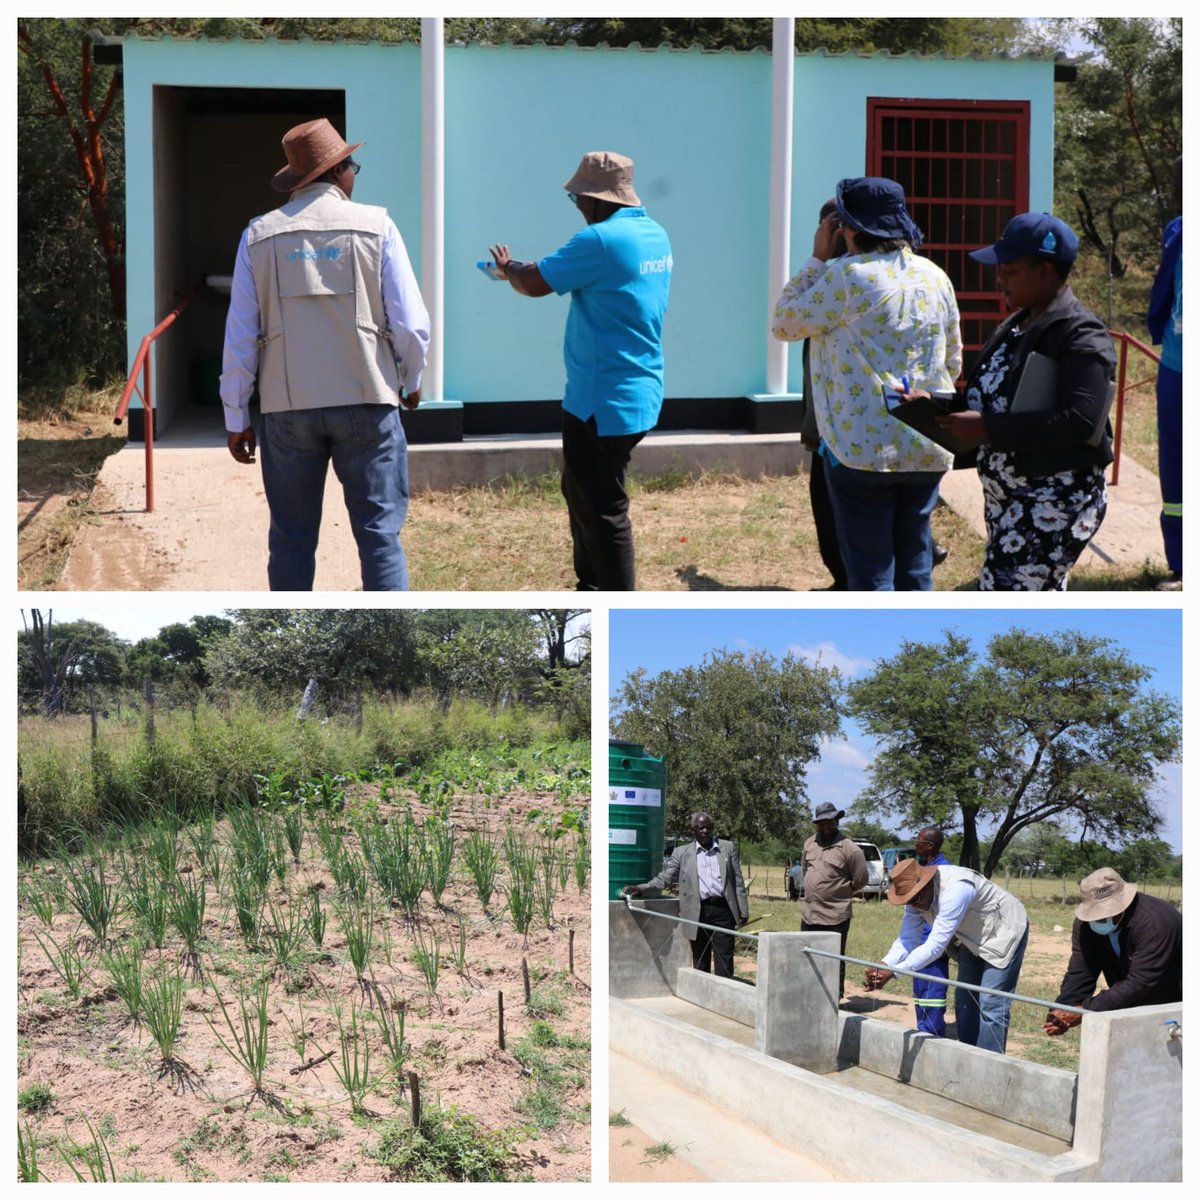 With💧access , we also improved sanitation facilities, group hand washing & school gardening #ForEveryChild in Silima Pry School, Mangwe District of MatSouth Prov 🇿🇼. #ERVHIZ project @MoLAFWRD_Zim @MoPSEZW @UNICEFZIMBABWE @faosfsafrica @GoalZimbabwe @nutriactionzim, & @euinzim